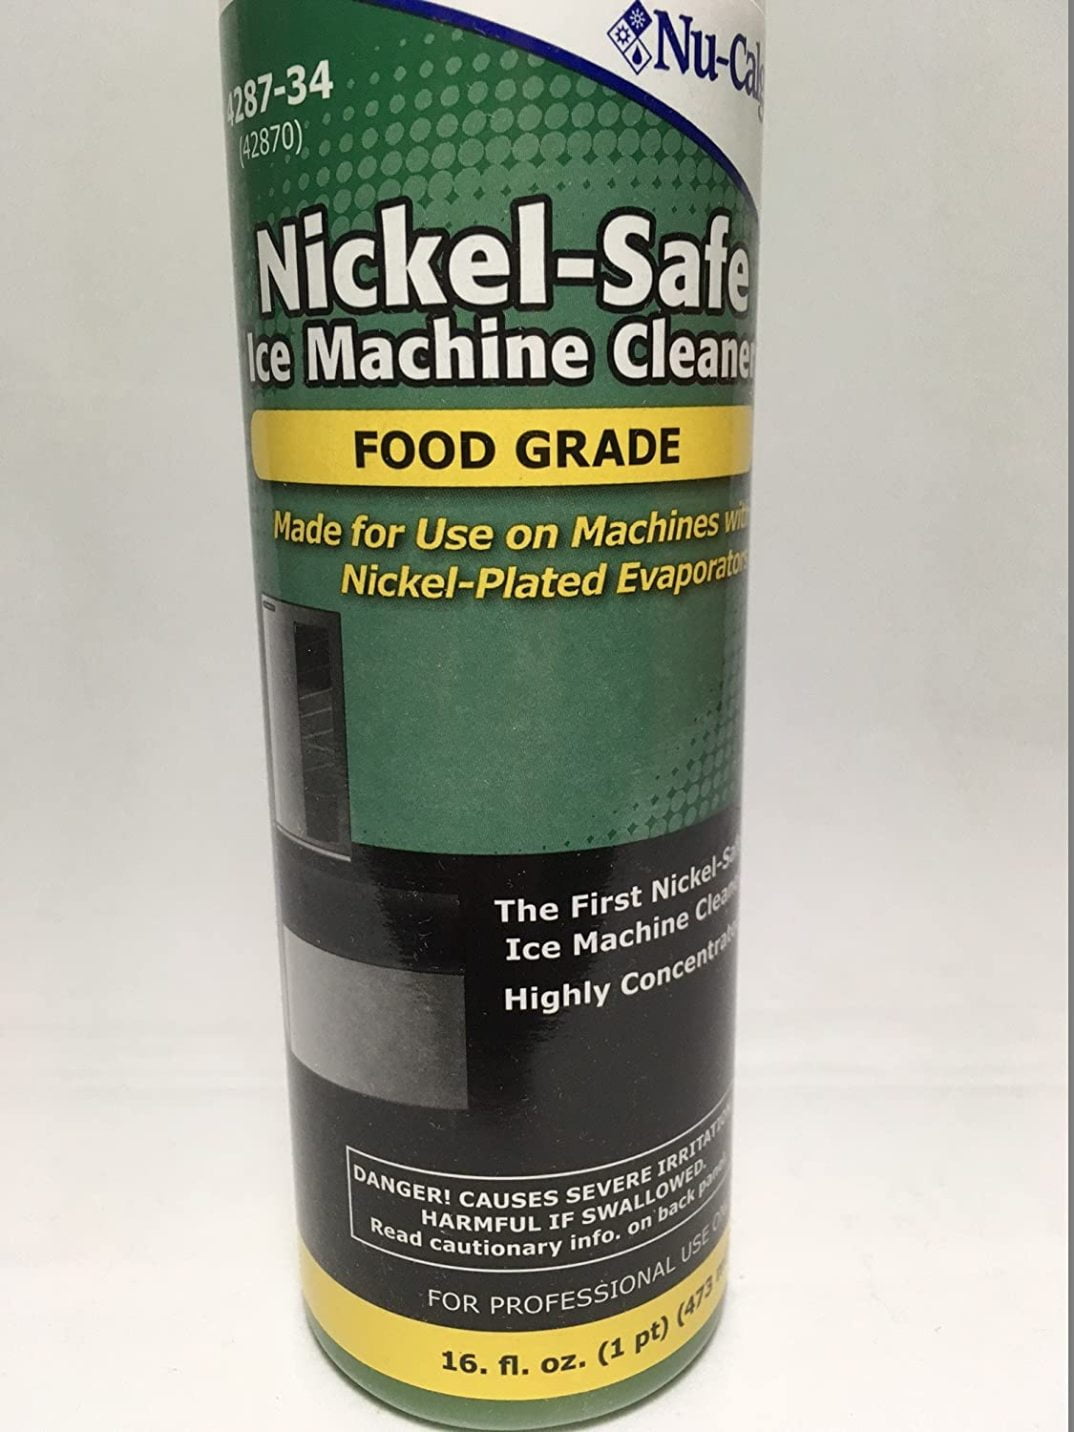 NU-CALGON 4287-34 Nickel Safe Ice Machine Cleaner 16oz 